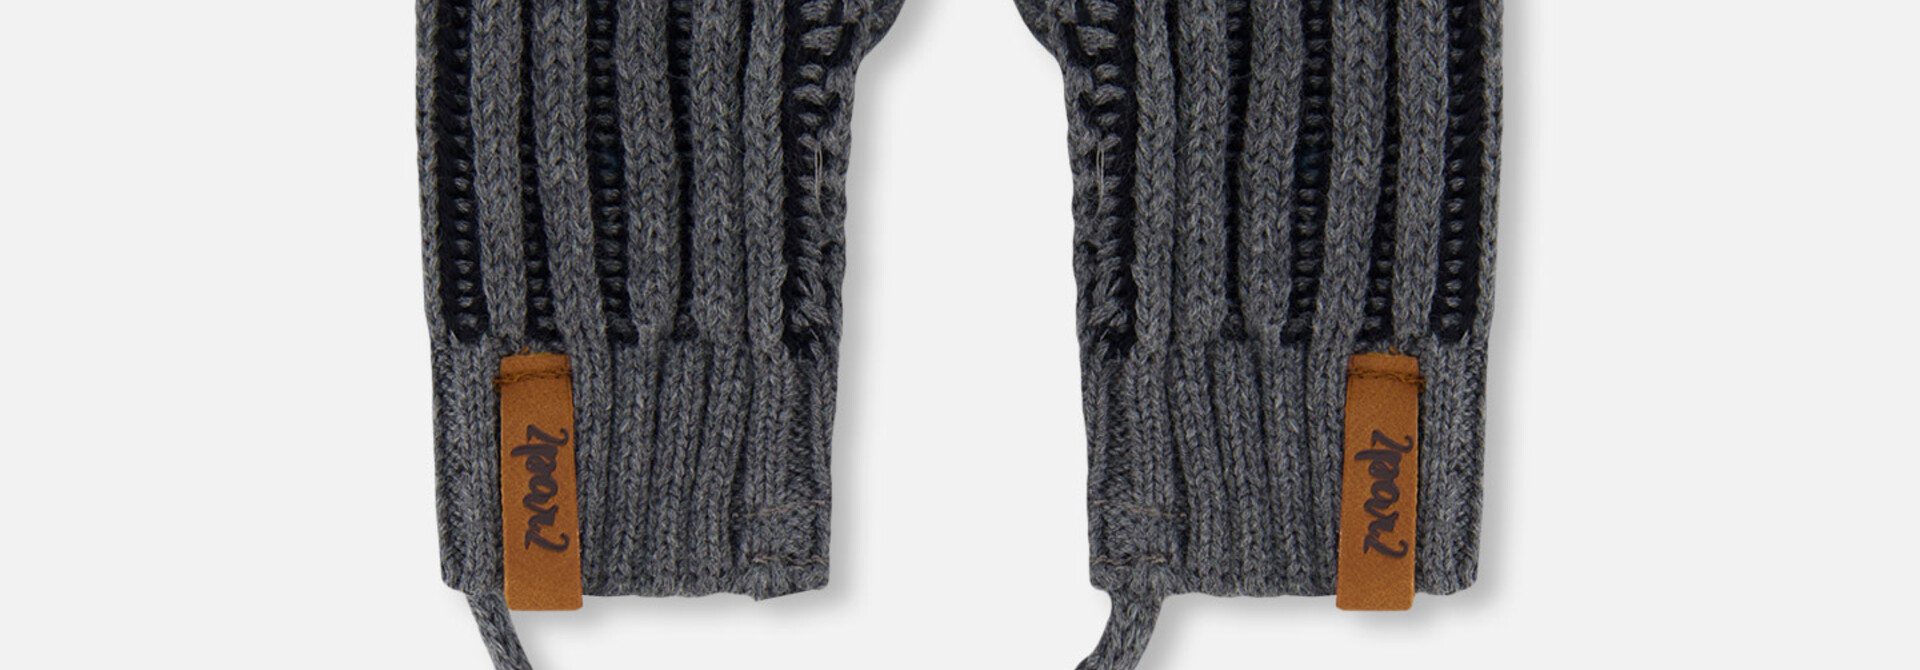 Mitaines en tricot avec corde - ANTHRACITE